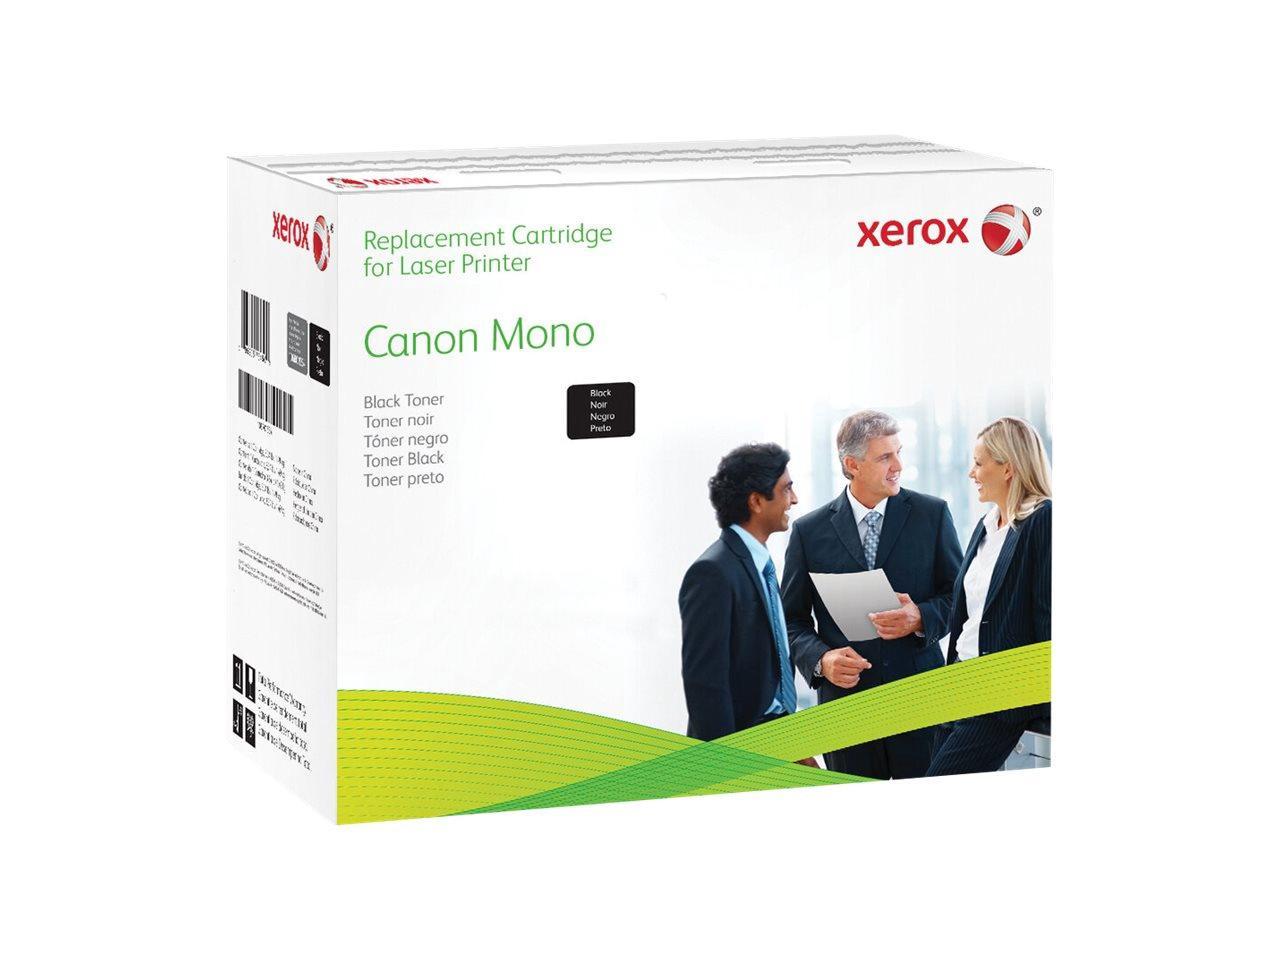 Xerox 006R04120 Compatible Toner Cartridge Replaces Canon 2797B003AA Magenta